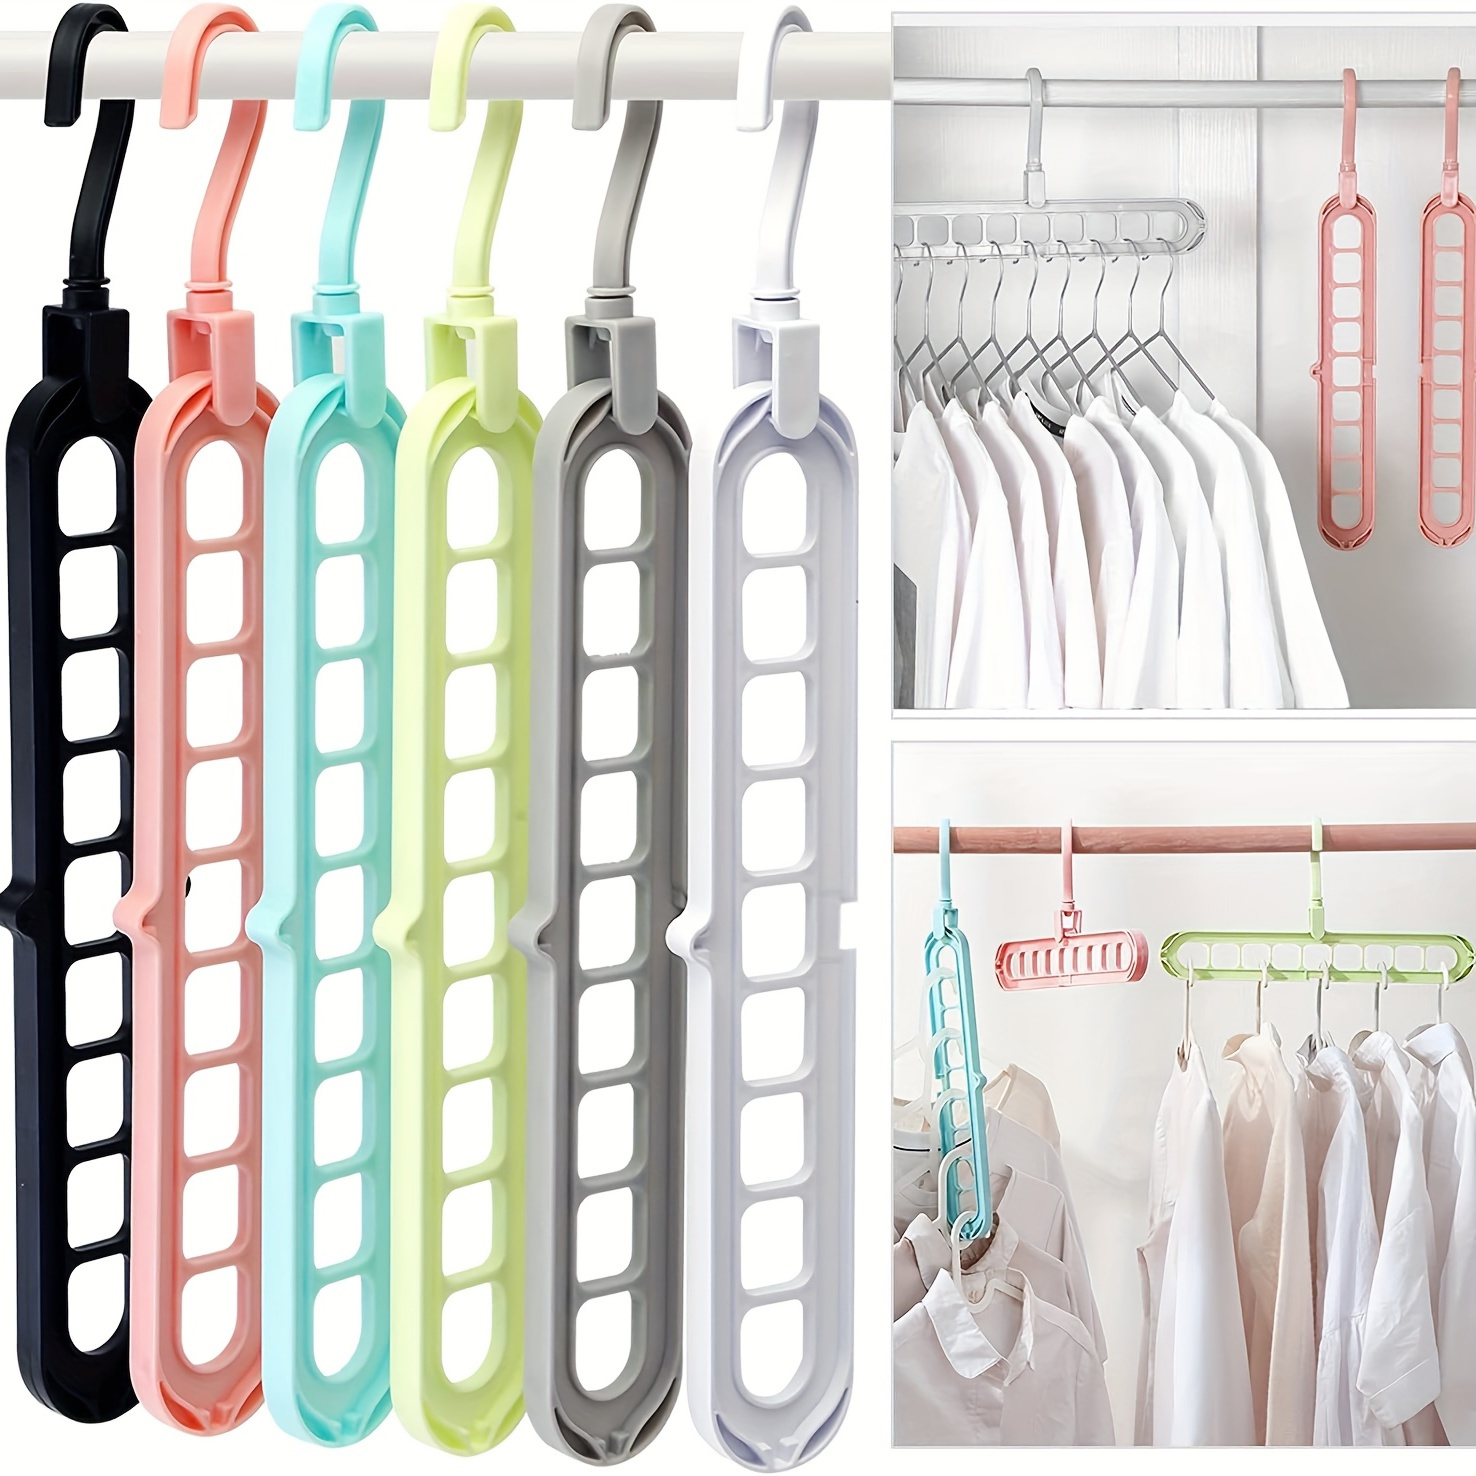 40PCS Clothes Hanger Connector Hooks Closet Hangers Organizer Space Saving  Clip Perfect for College Students/dorm Room Closets, Small Closet 